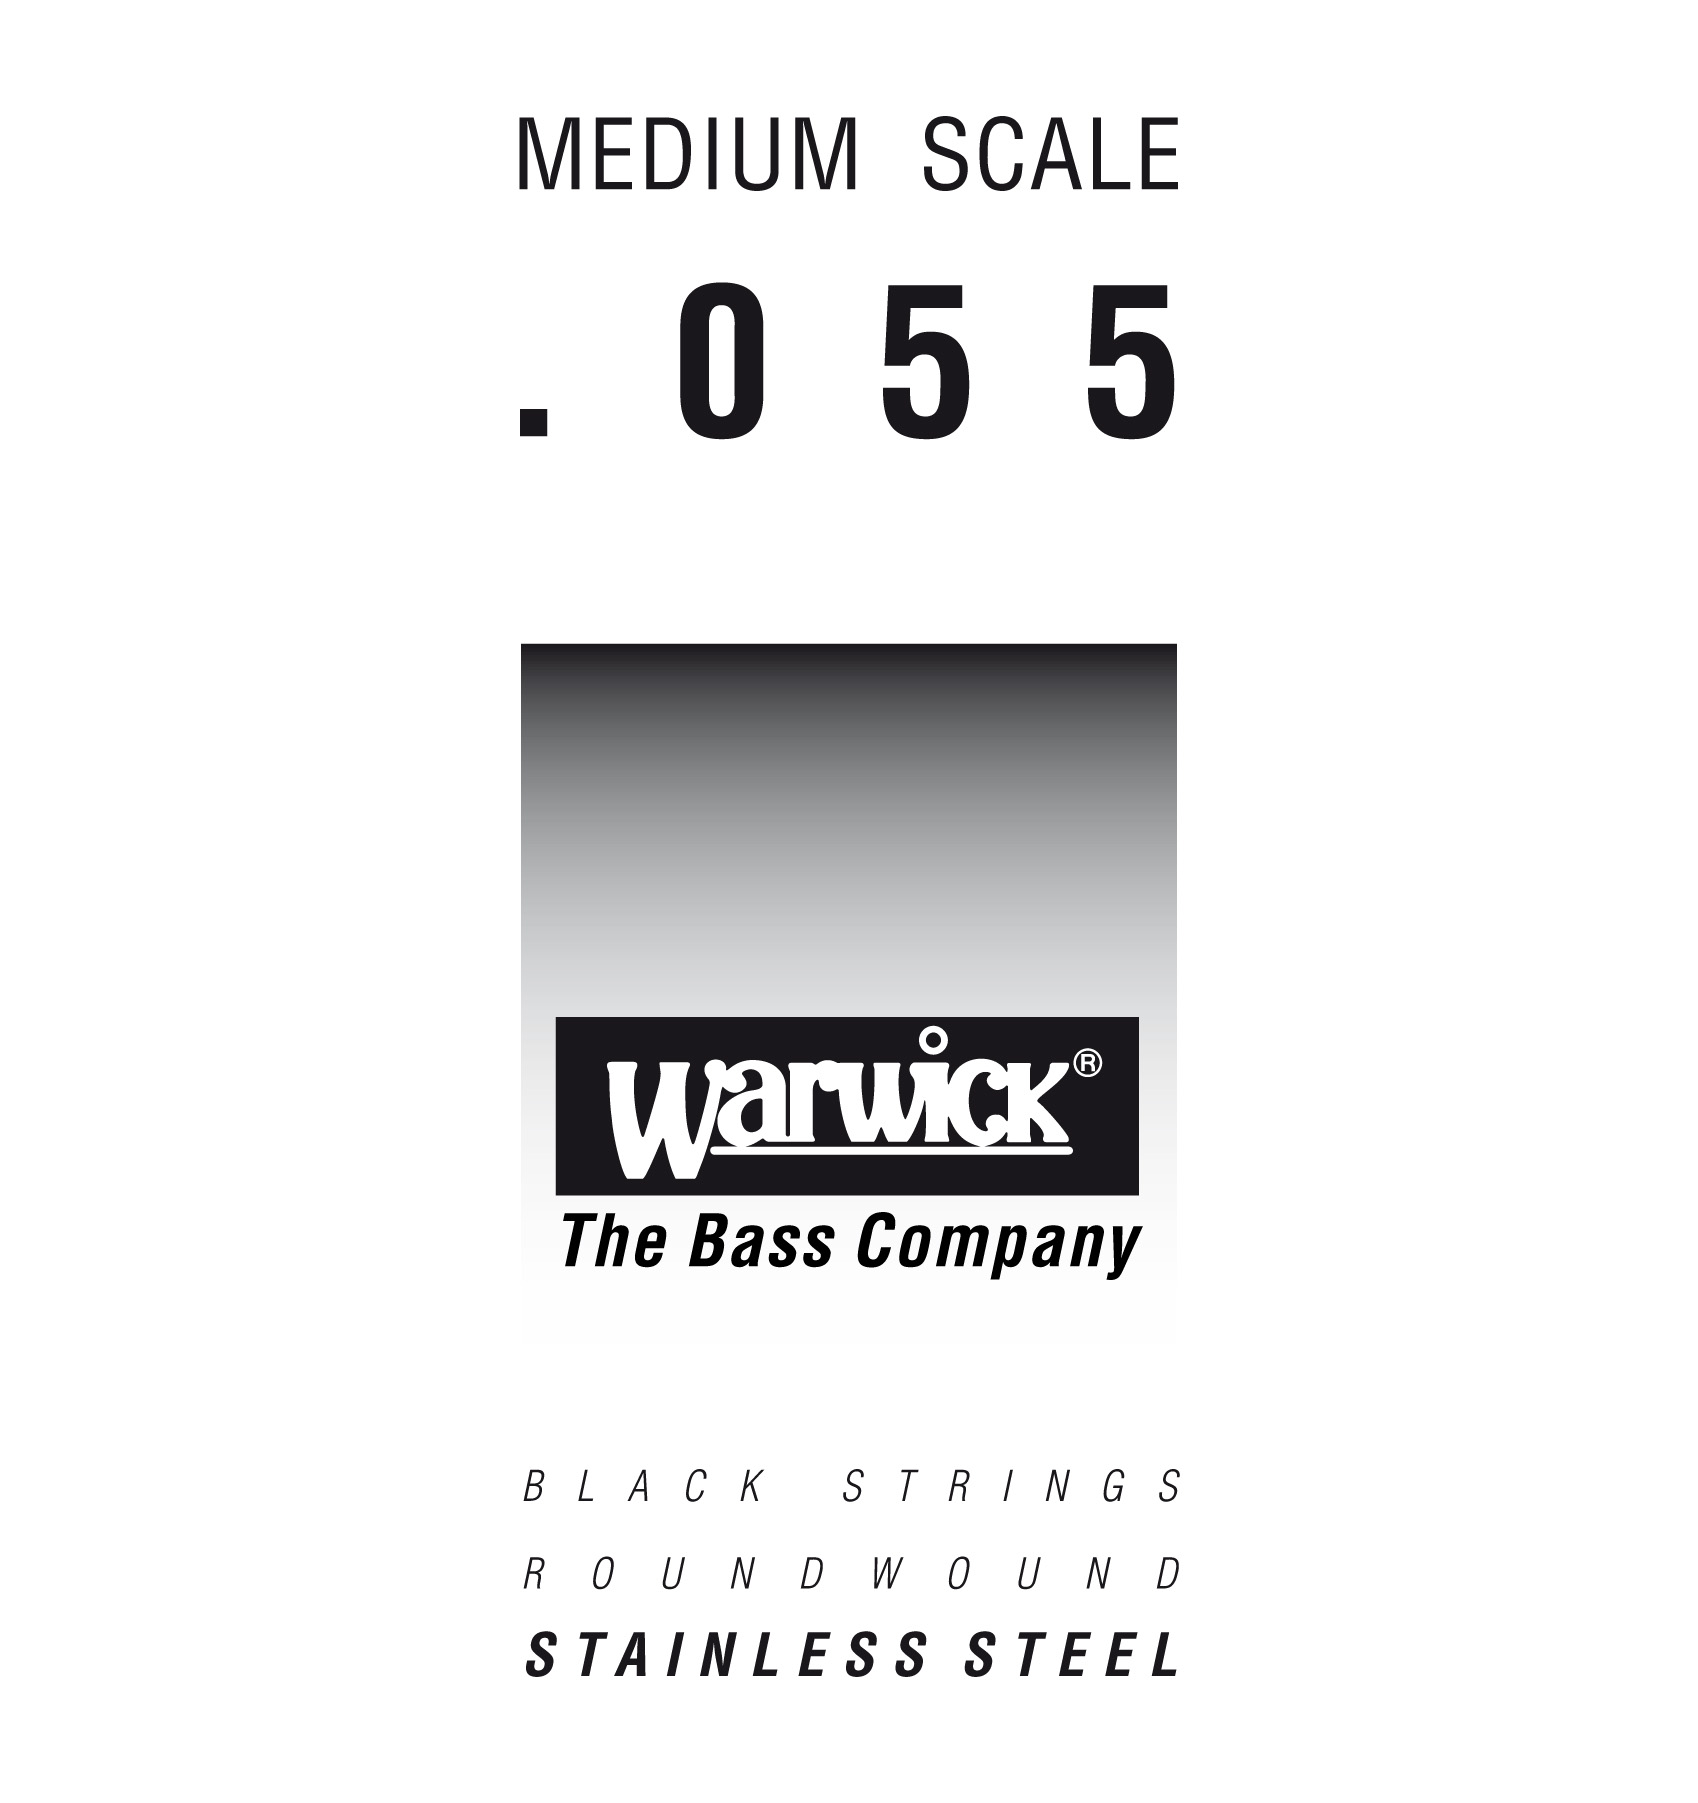 Warwick Black Label Bass Strings, Stainless Steel - Bass Single String, .055", Medium Scale